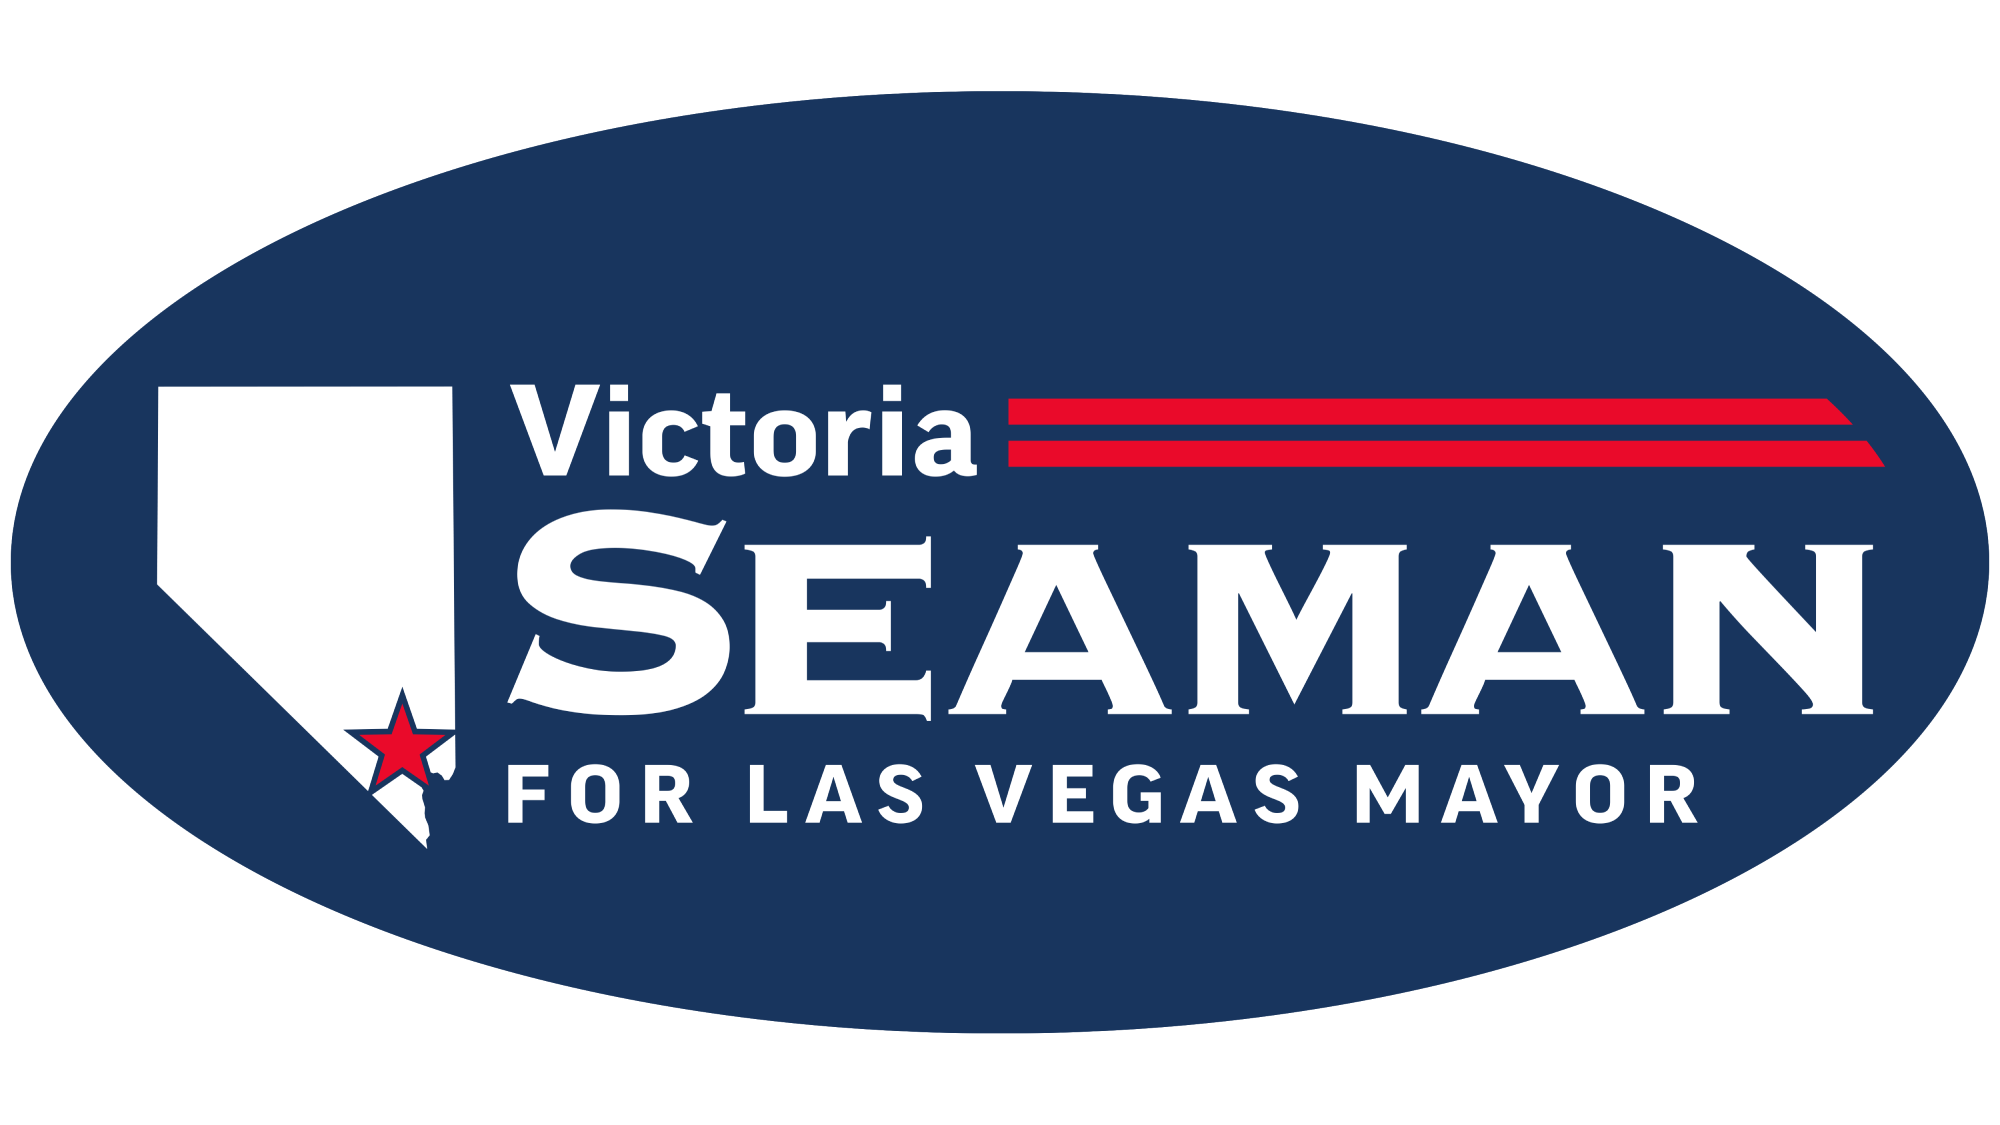 Victoria Seaman for Las Vegas Mayor